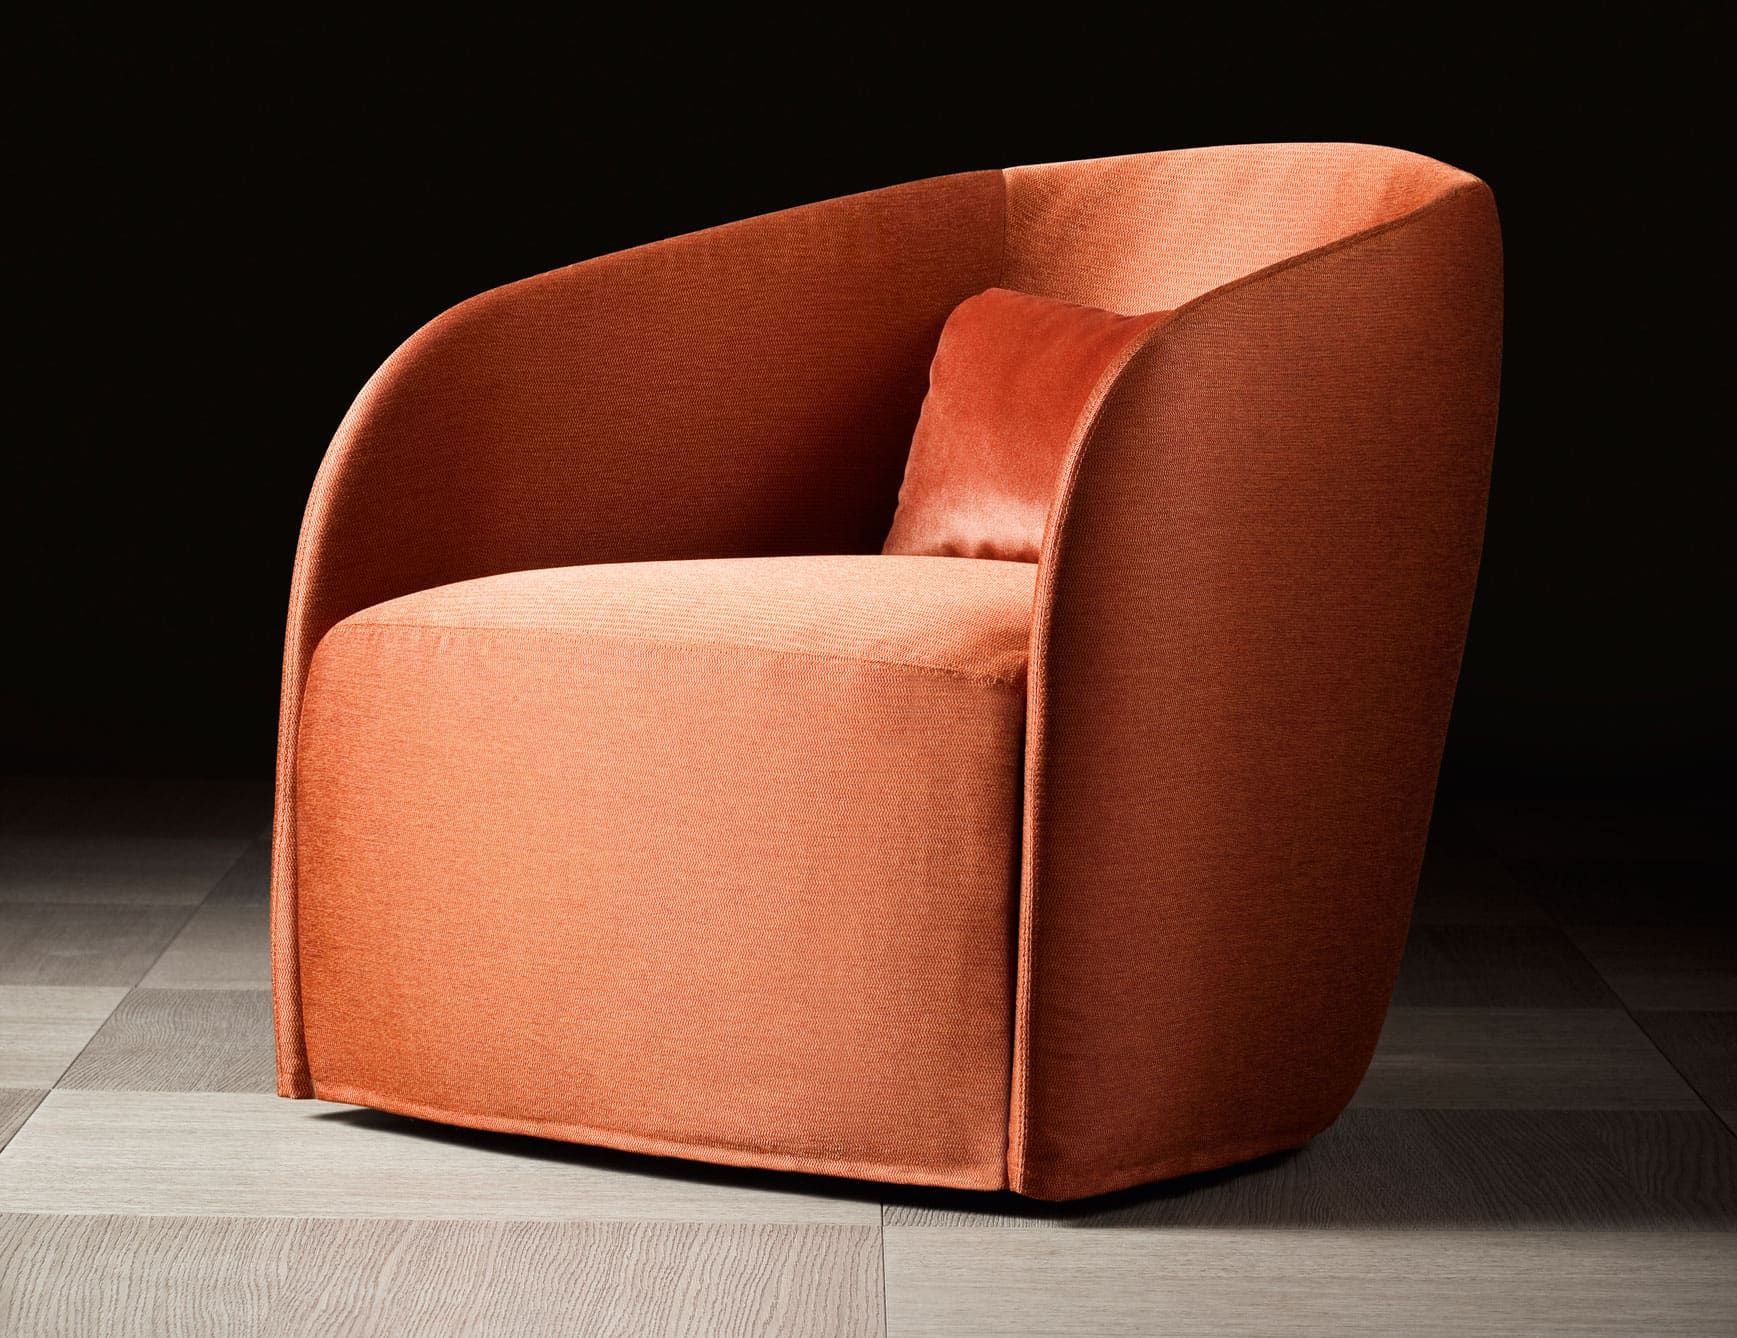 Febe modern luxury sofa chair with orange leather